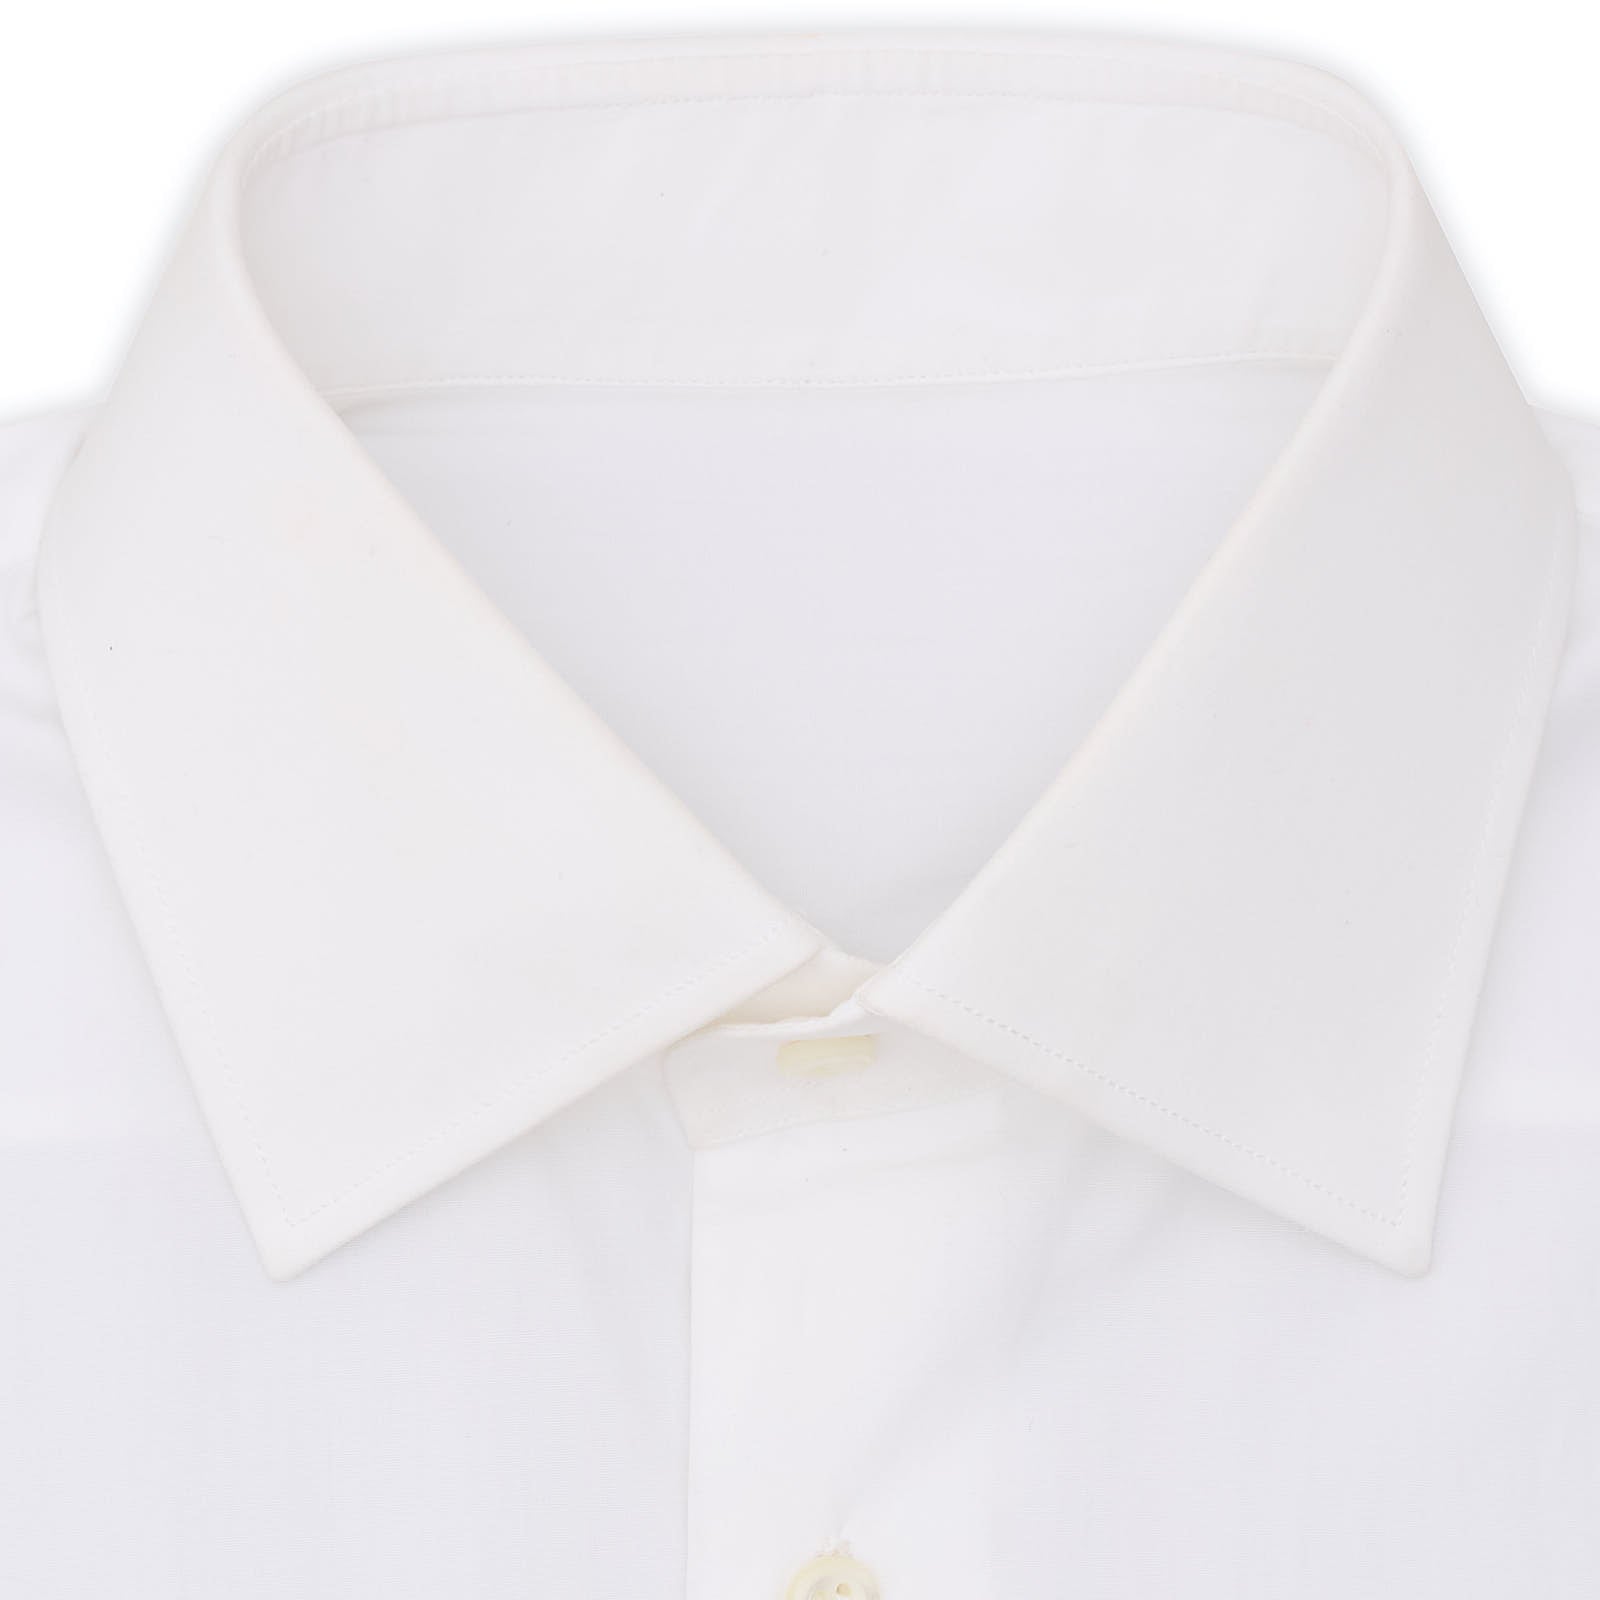 BESPOKE ATHENS Handmade White Cotton Poplin Dress Shirt EU 39 NEW US 15.5